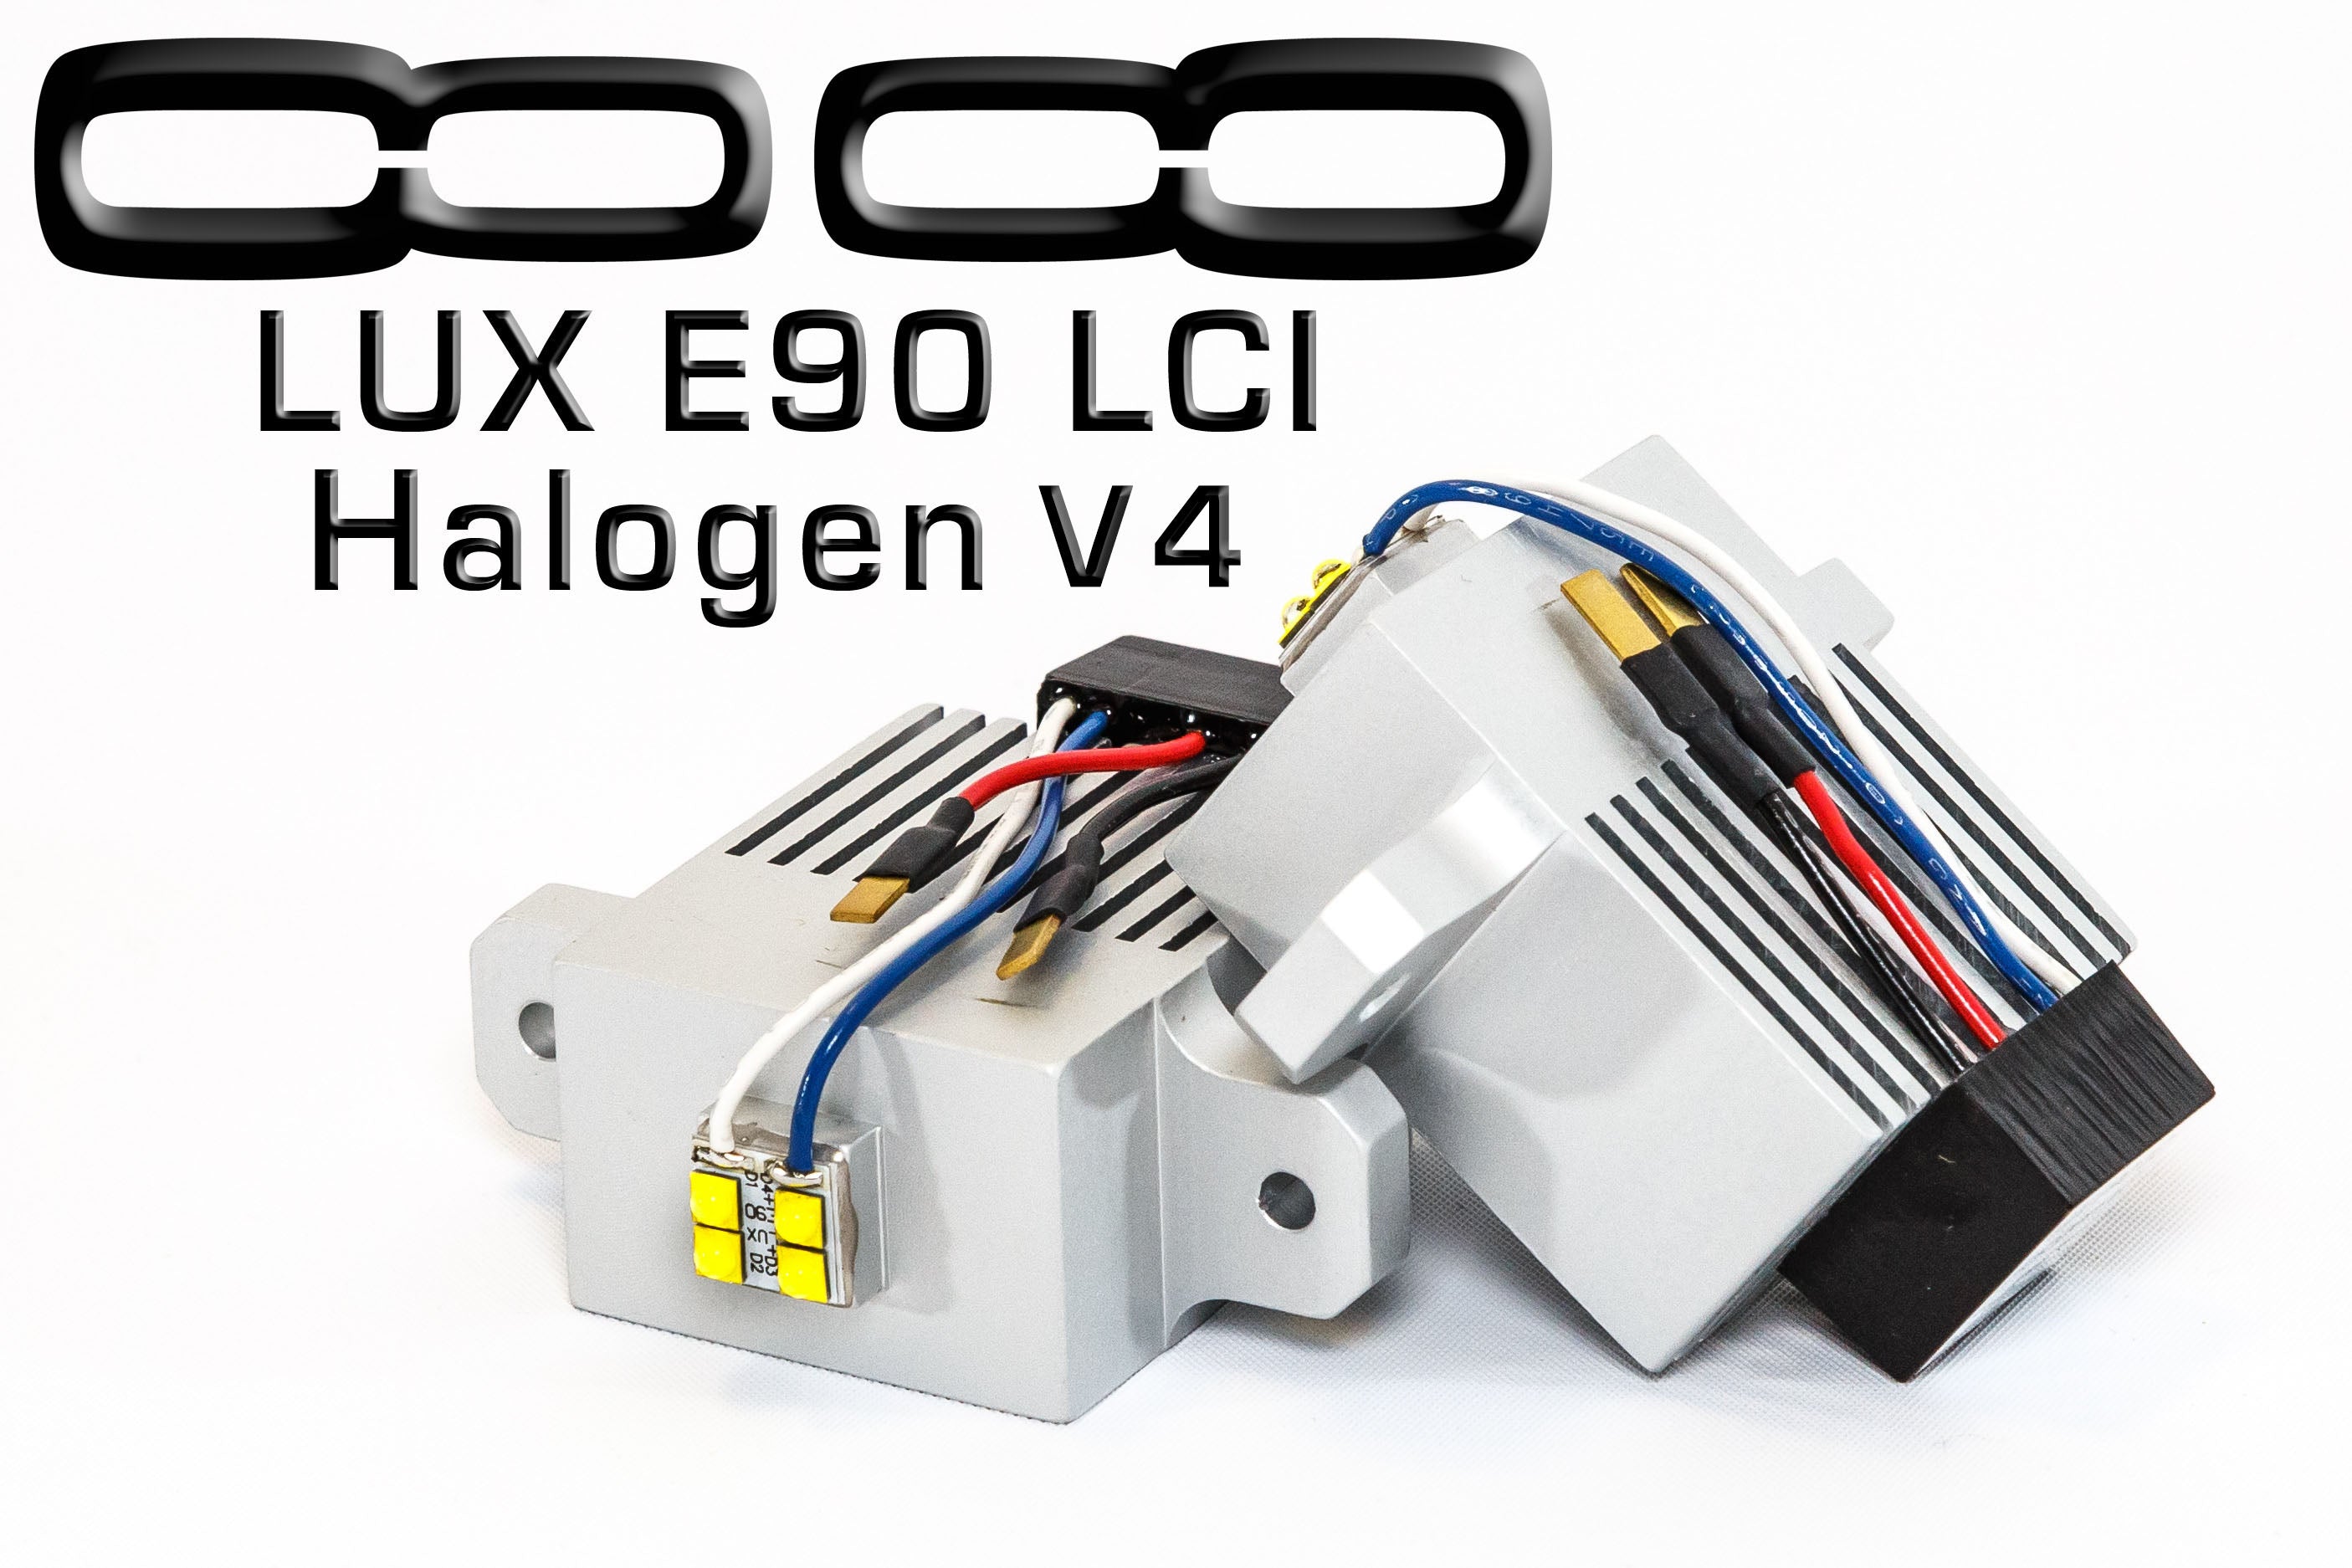 LUX E90 LCI Halogen V4 - Lux Angel Eyes